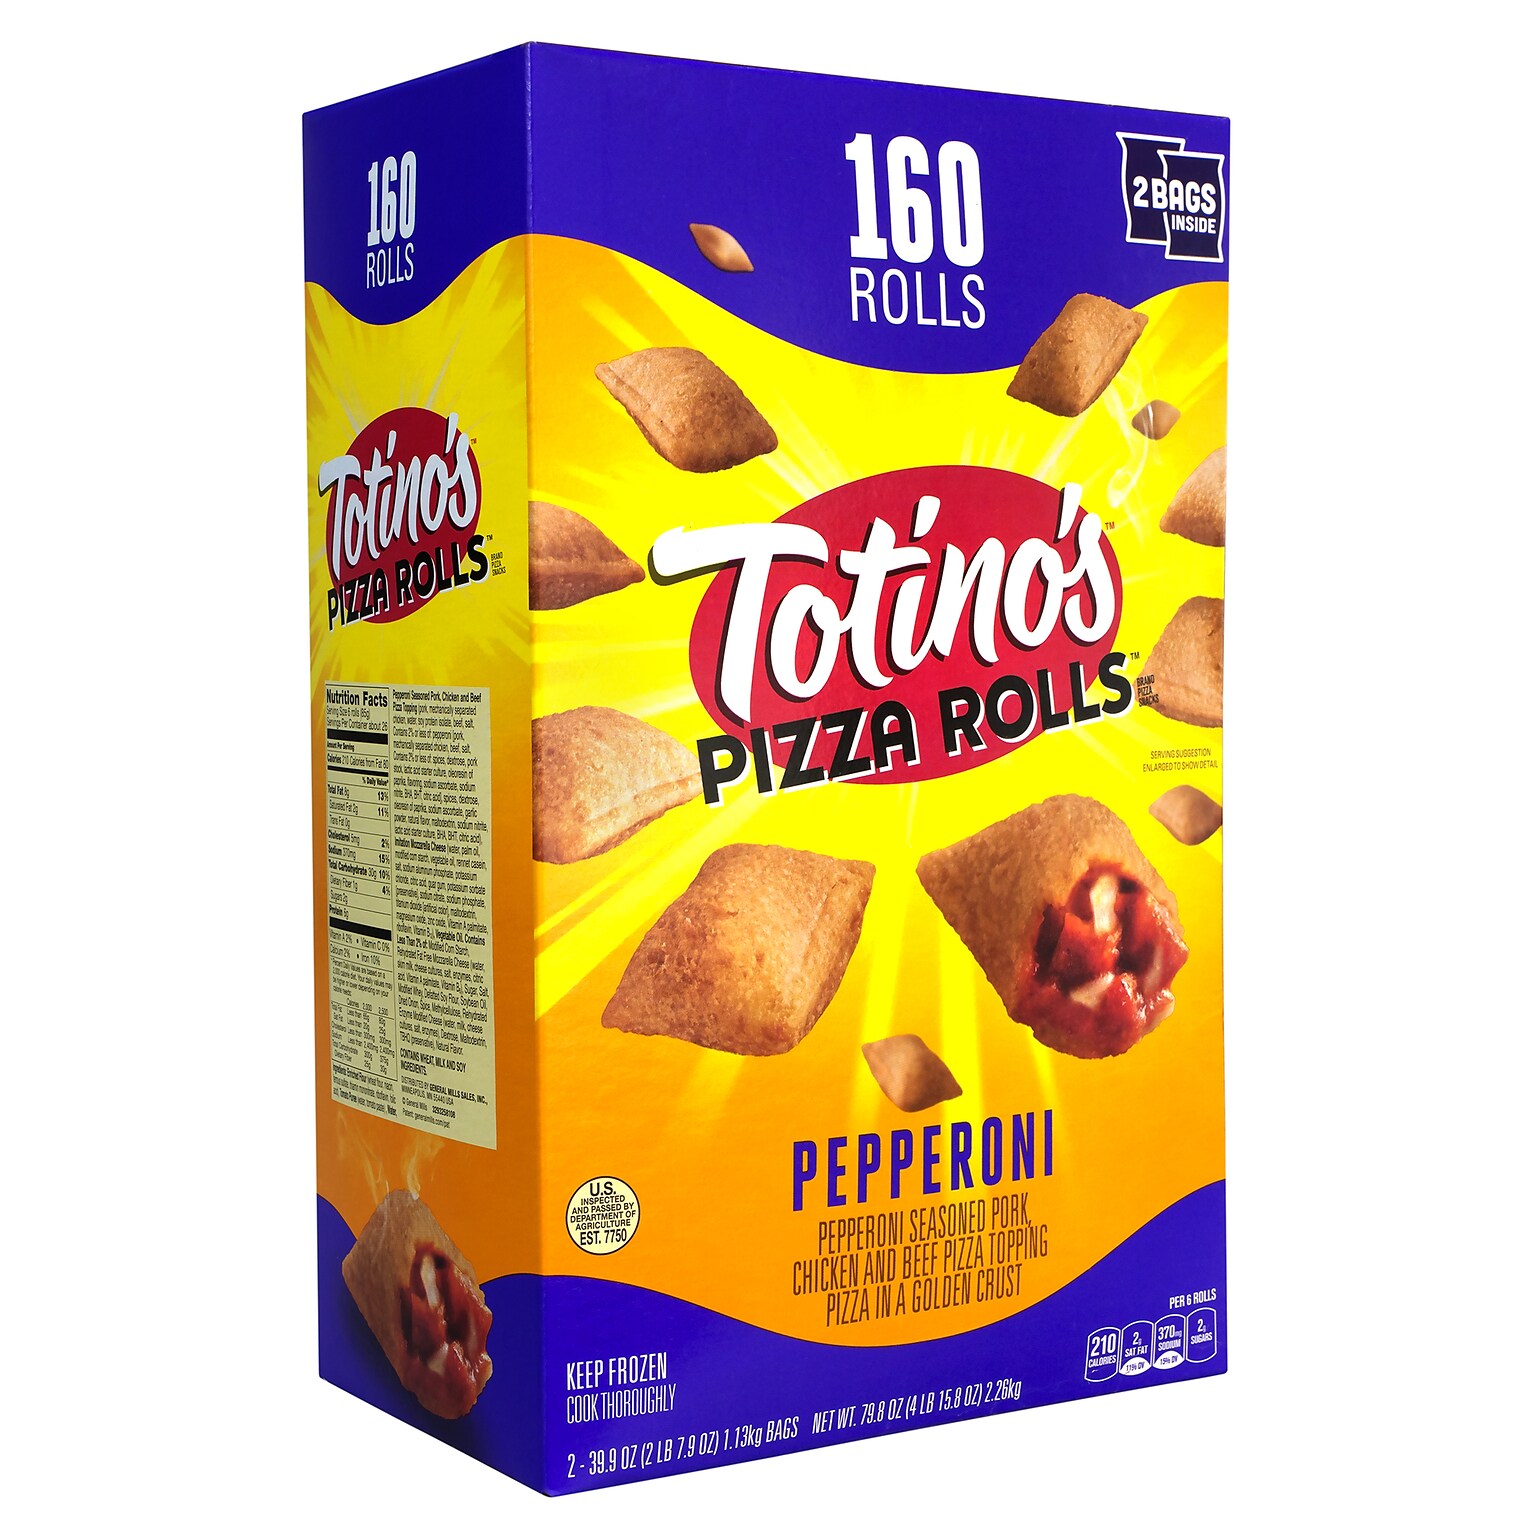 Totinos Pepperoni Pizza Rolls, 160 Rolls (49481)